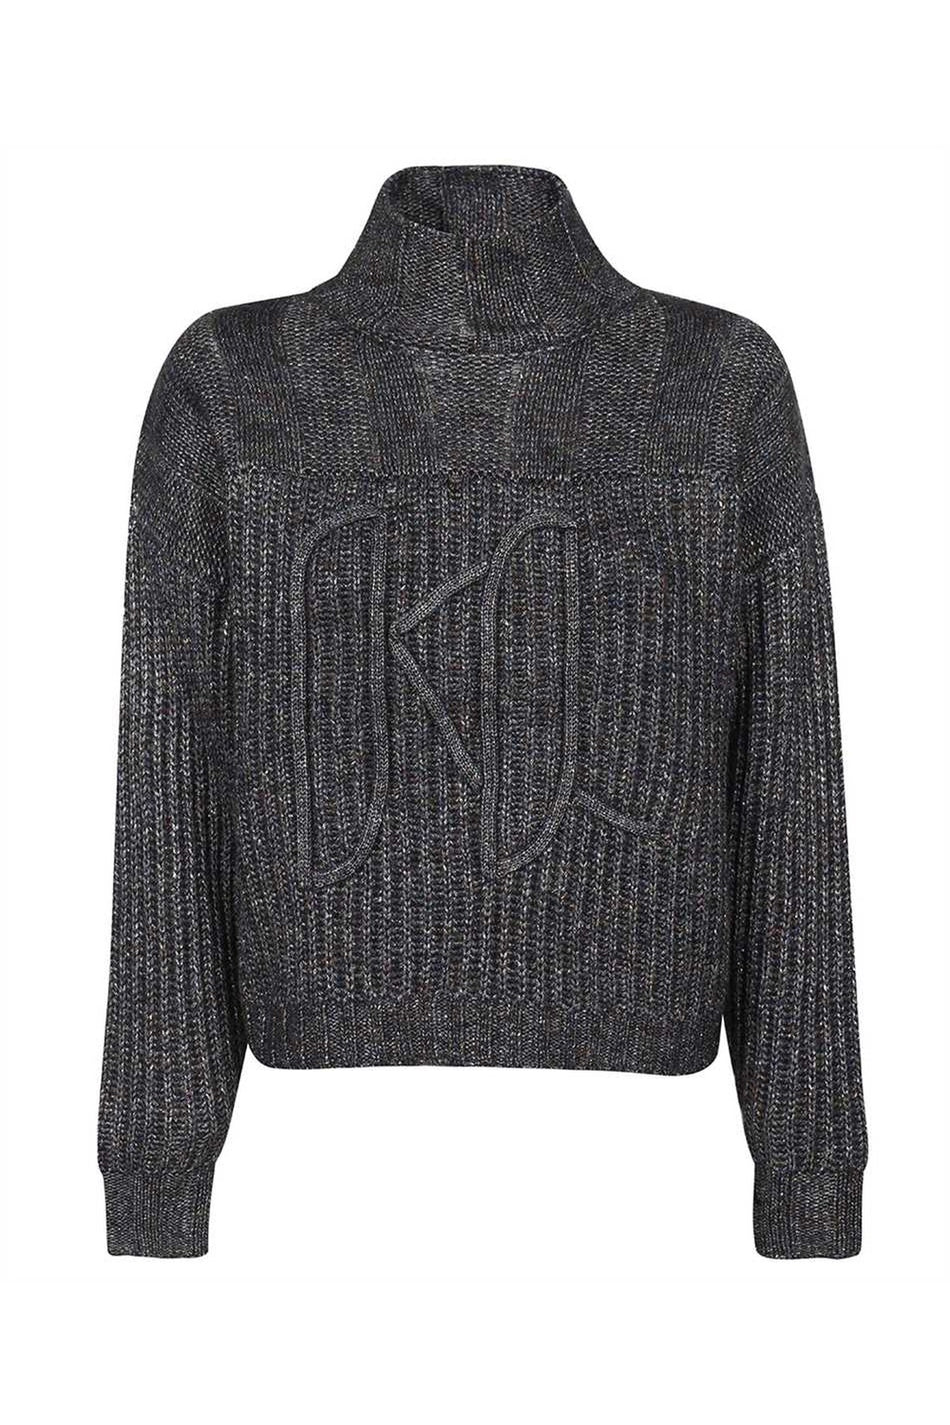 Turtleneck sweater-Karl Lagerfeld-OUTLET-SALE-L-ARCHIVIST